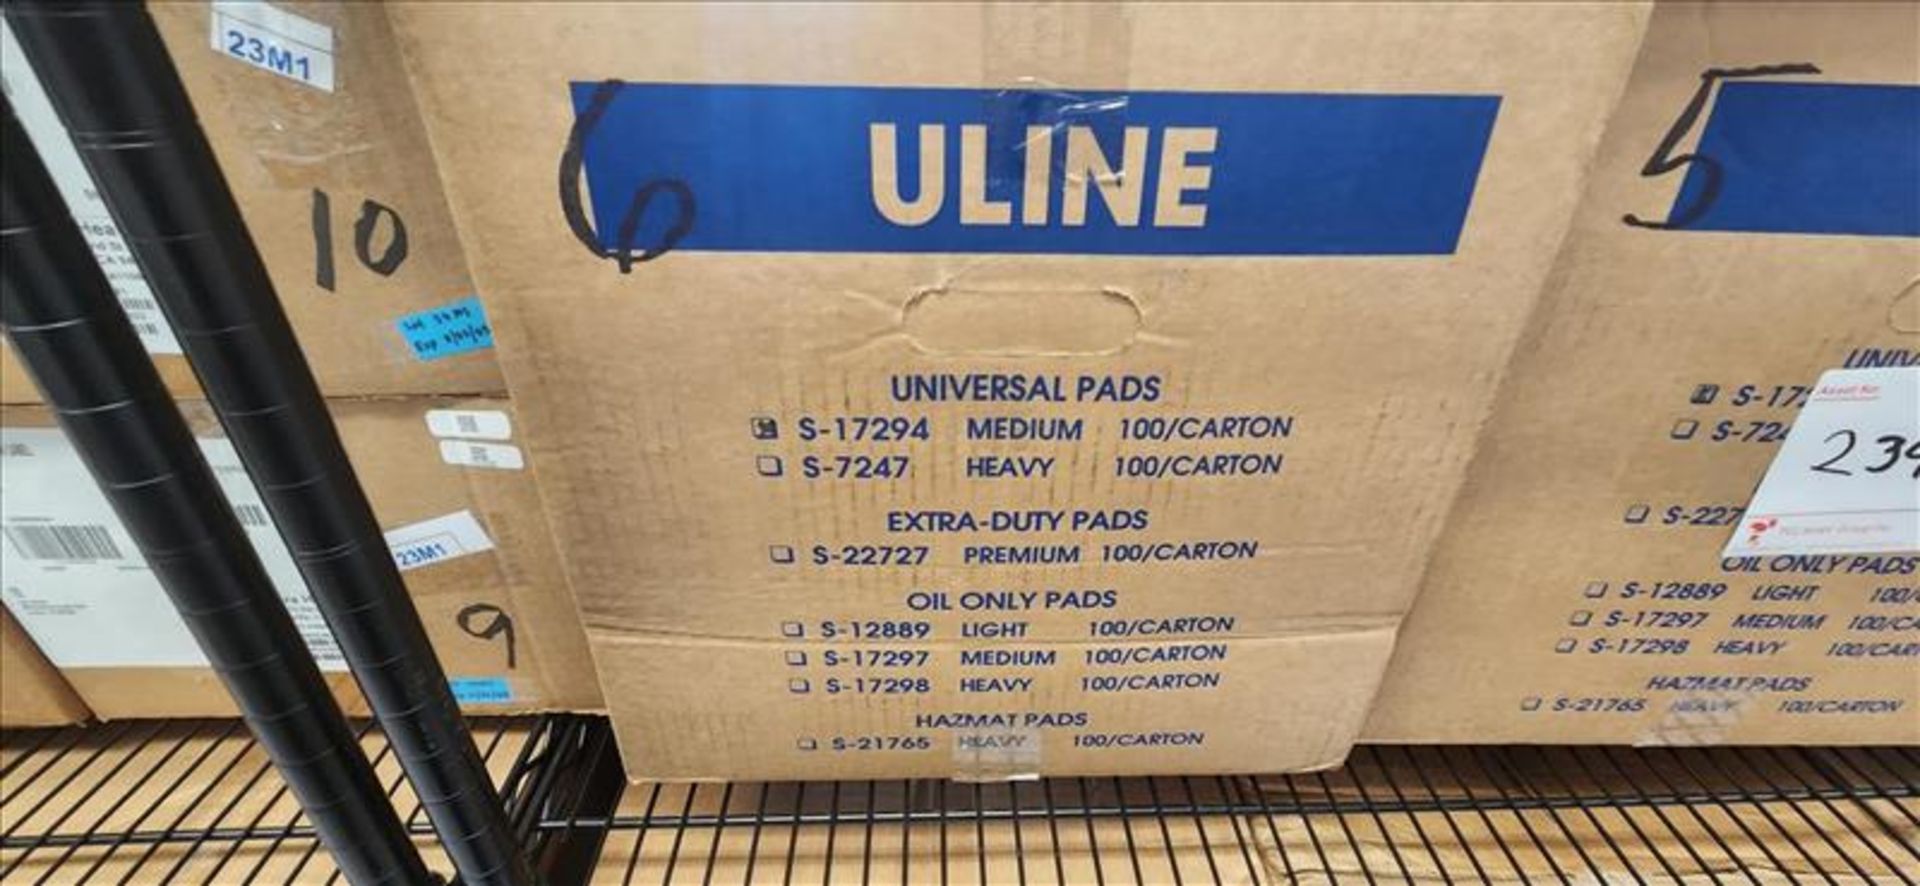 (10) Uline Universal Pads, 100 pcs per box - Image 2 of 2